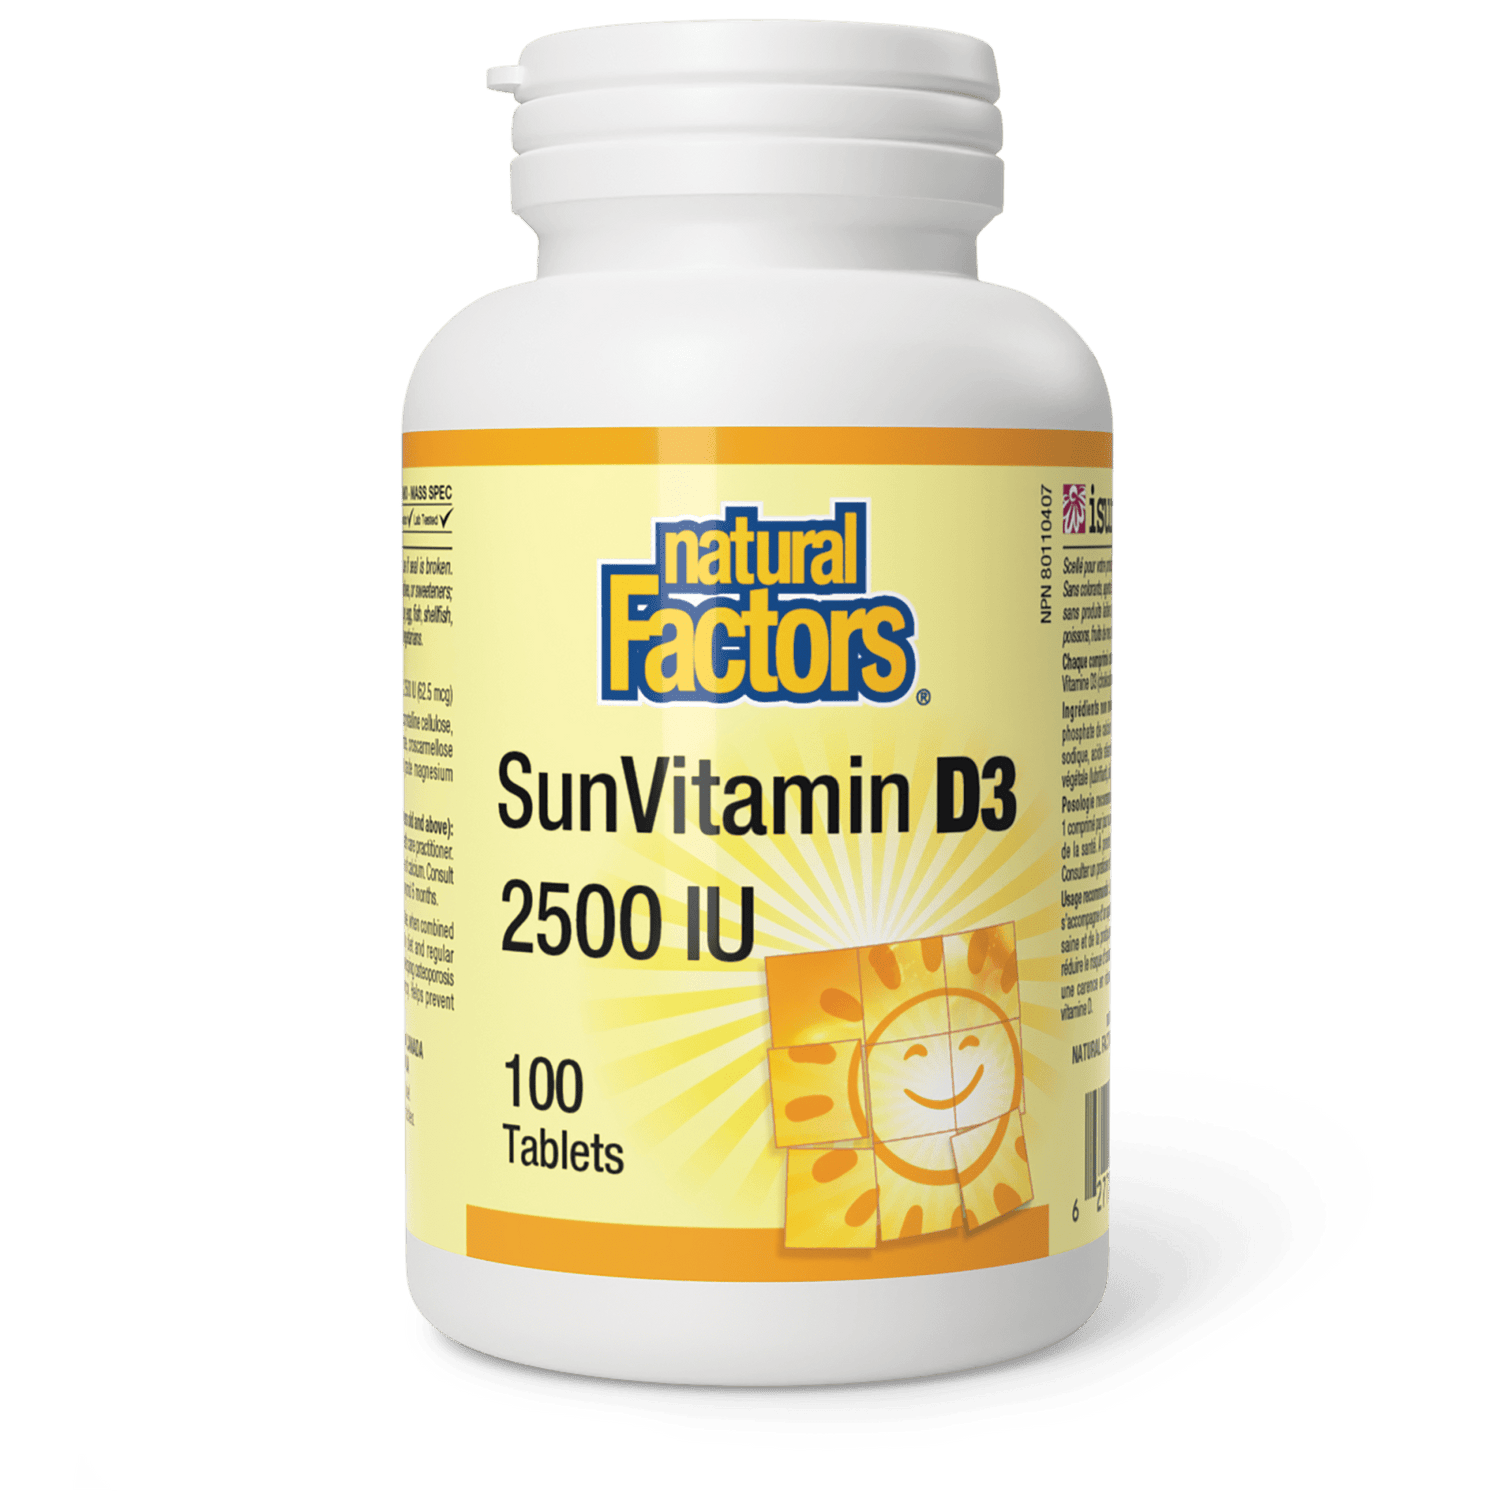 SunVitamin D3 Tablets 2500 IU, Natural Factors|v|image|1075